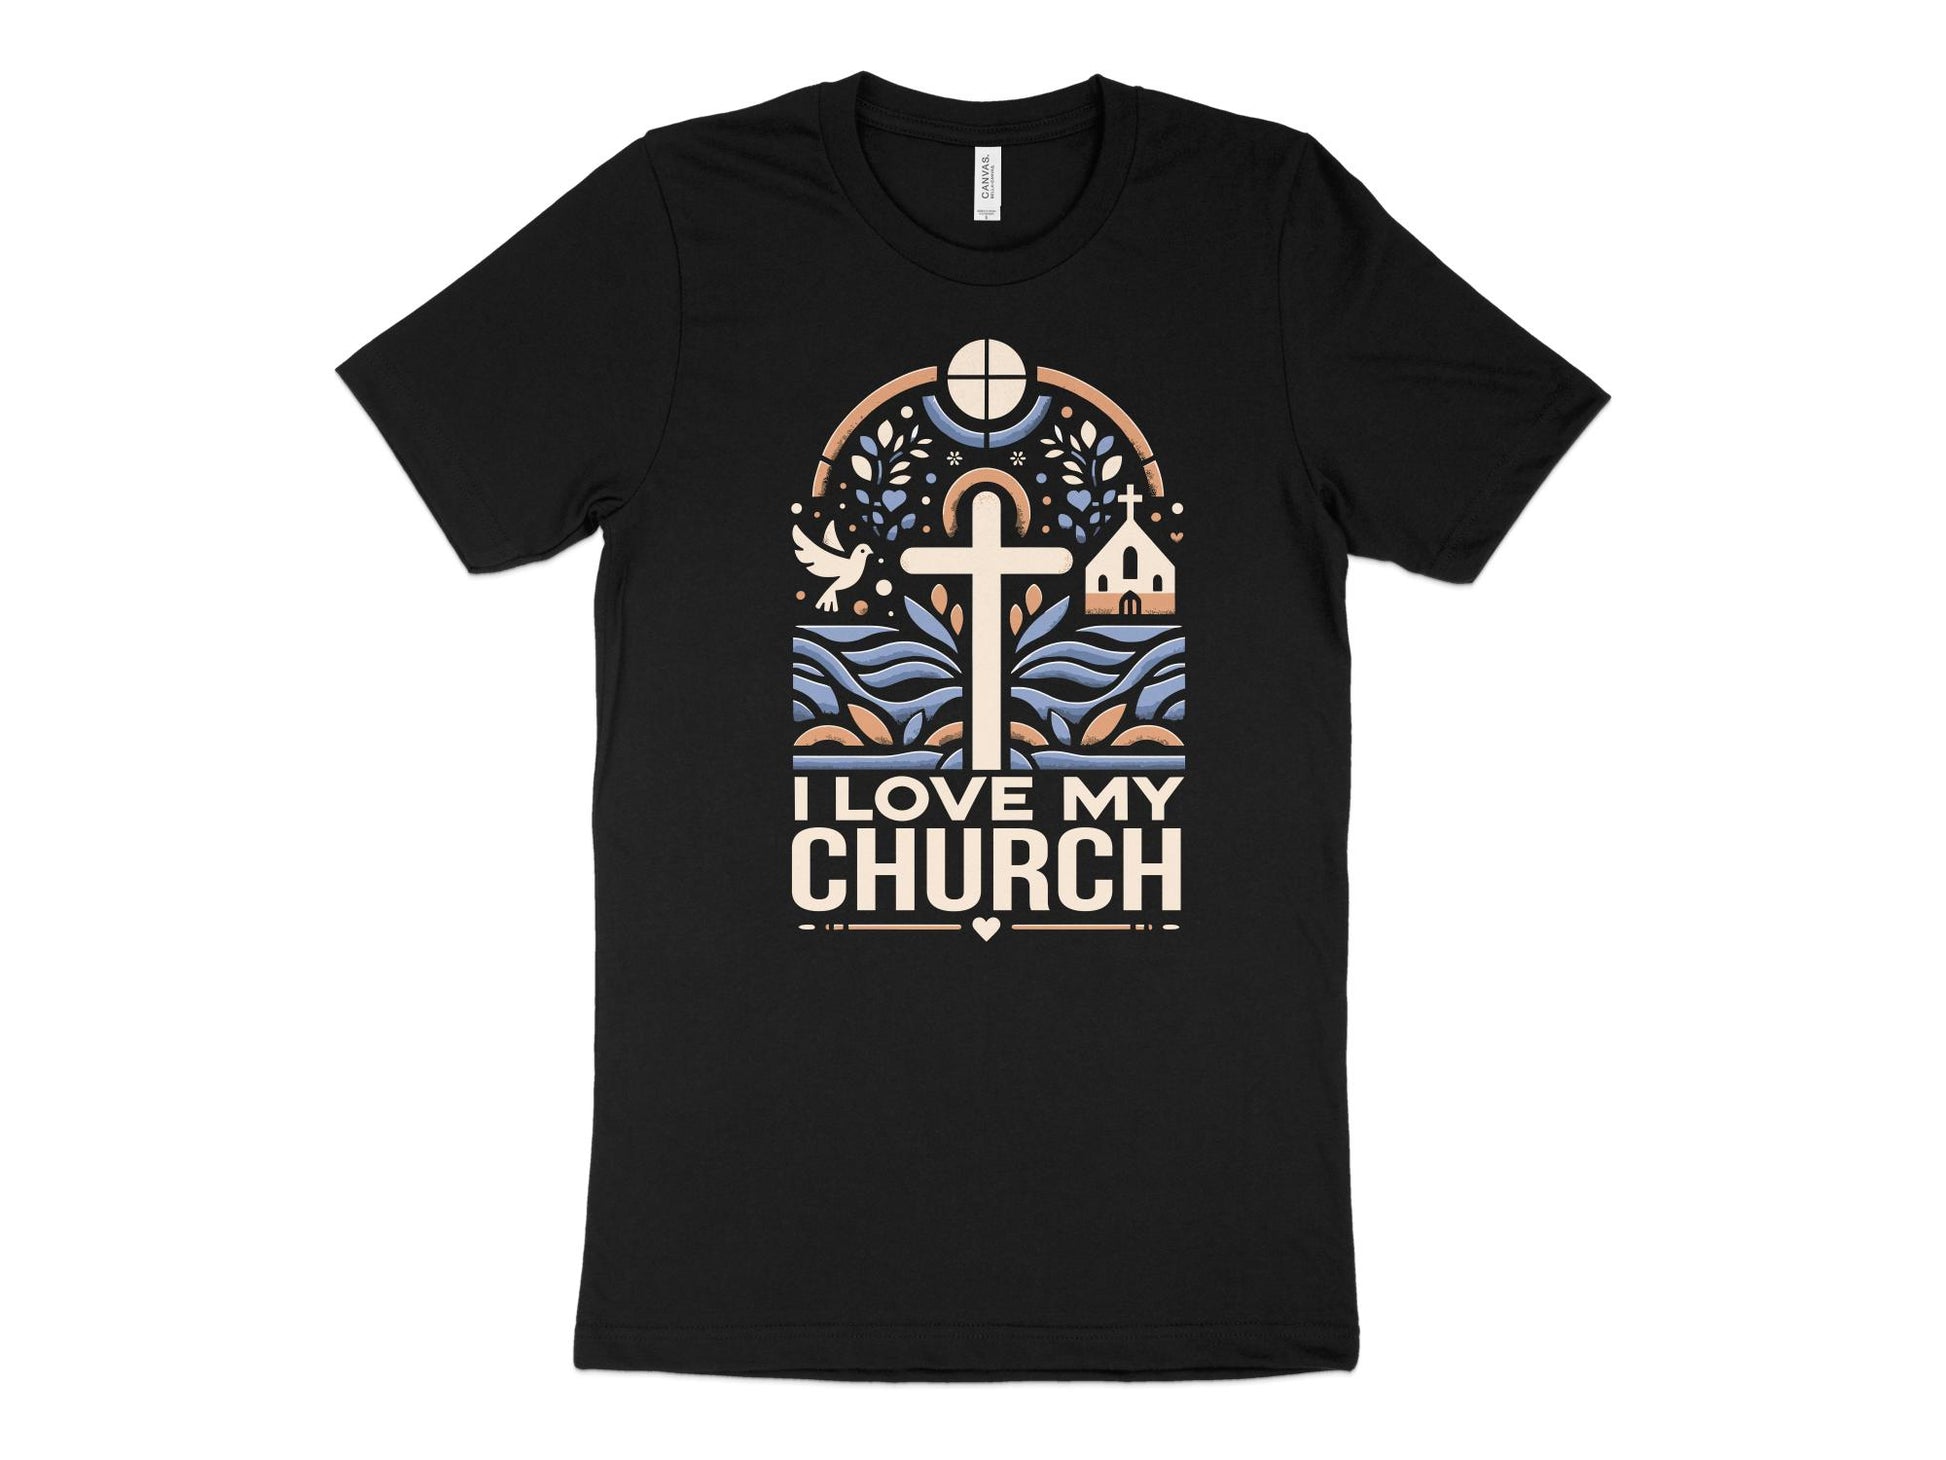 I Love My Church Shirts, black